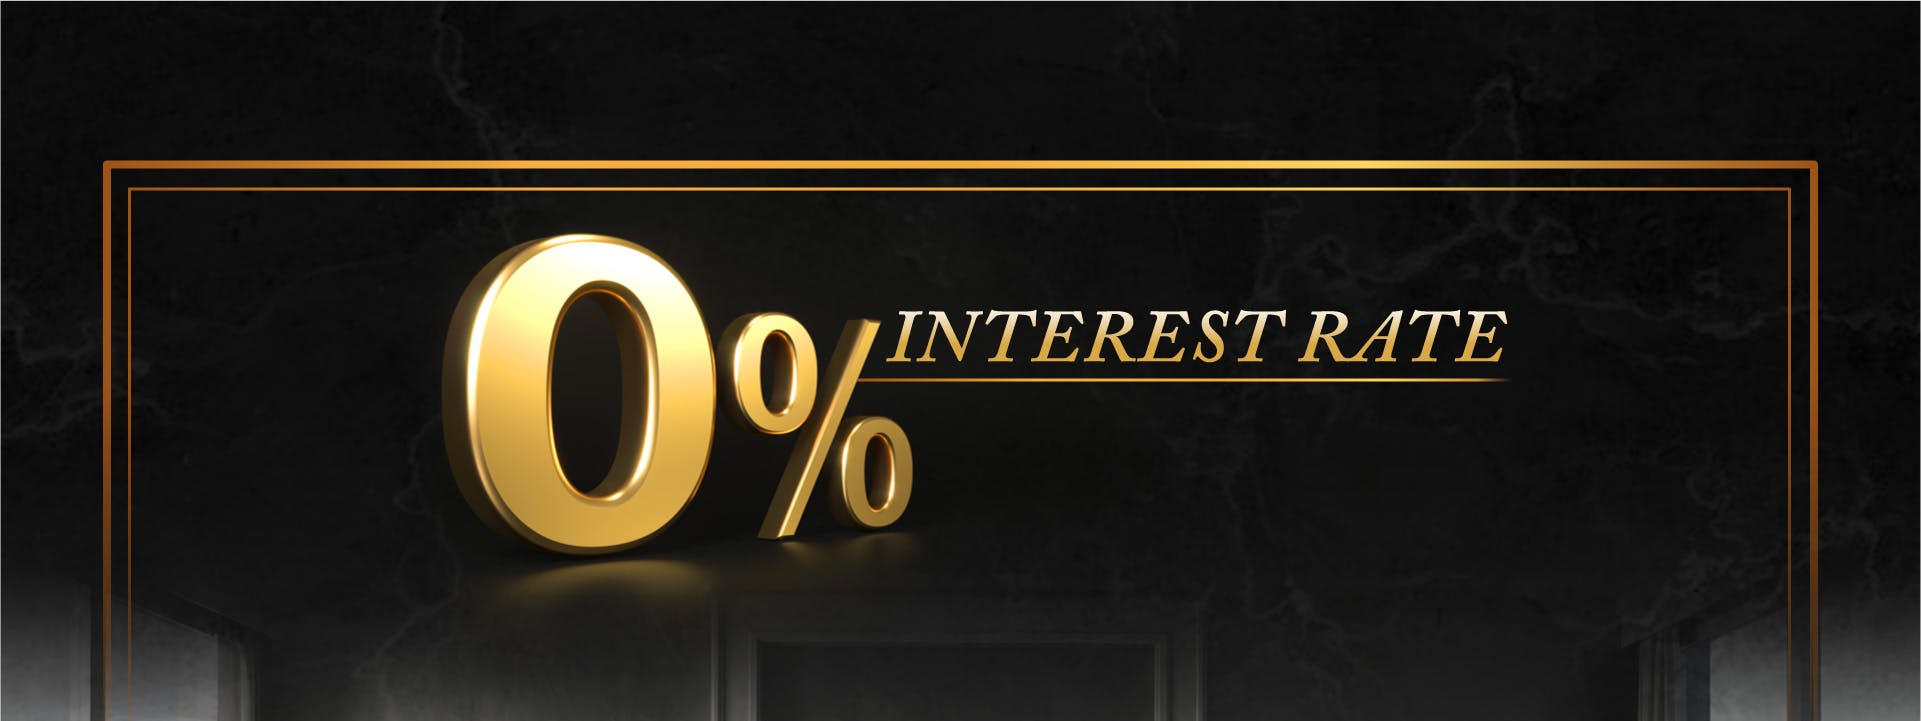 credit card 0% interest